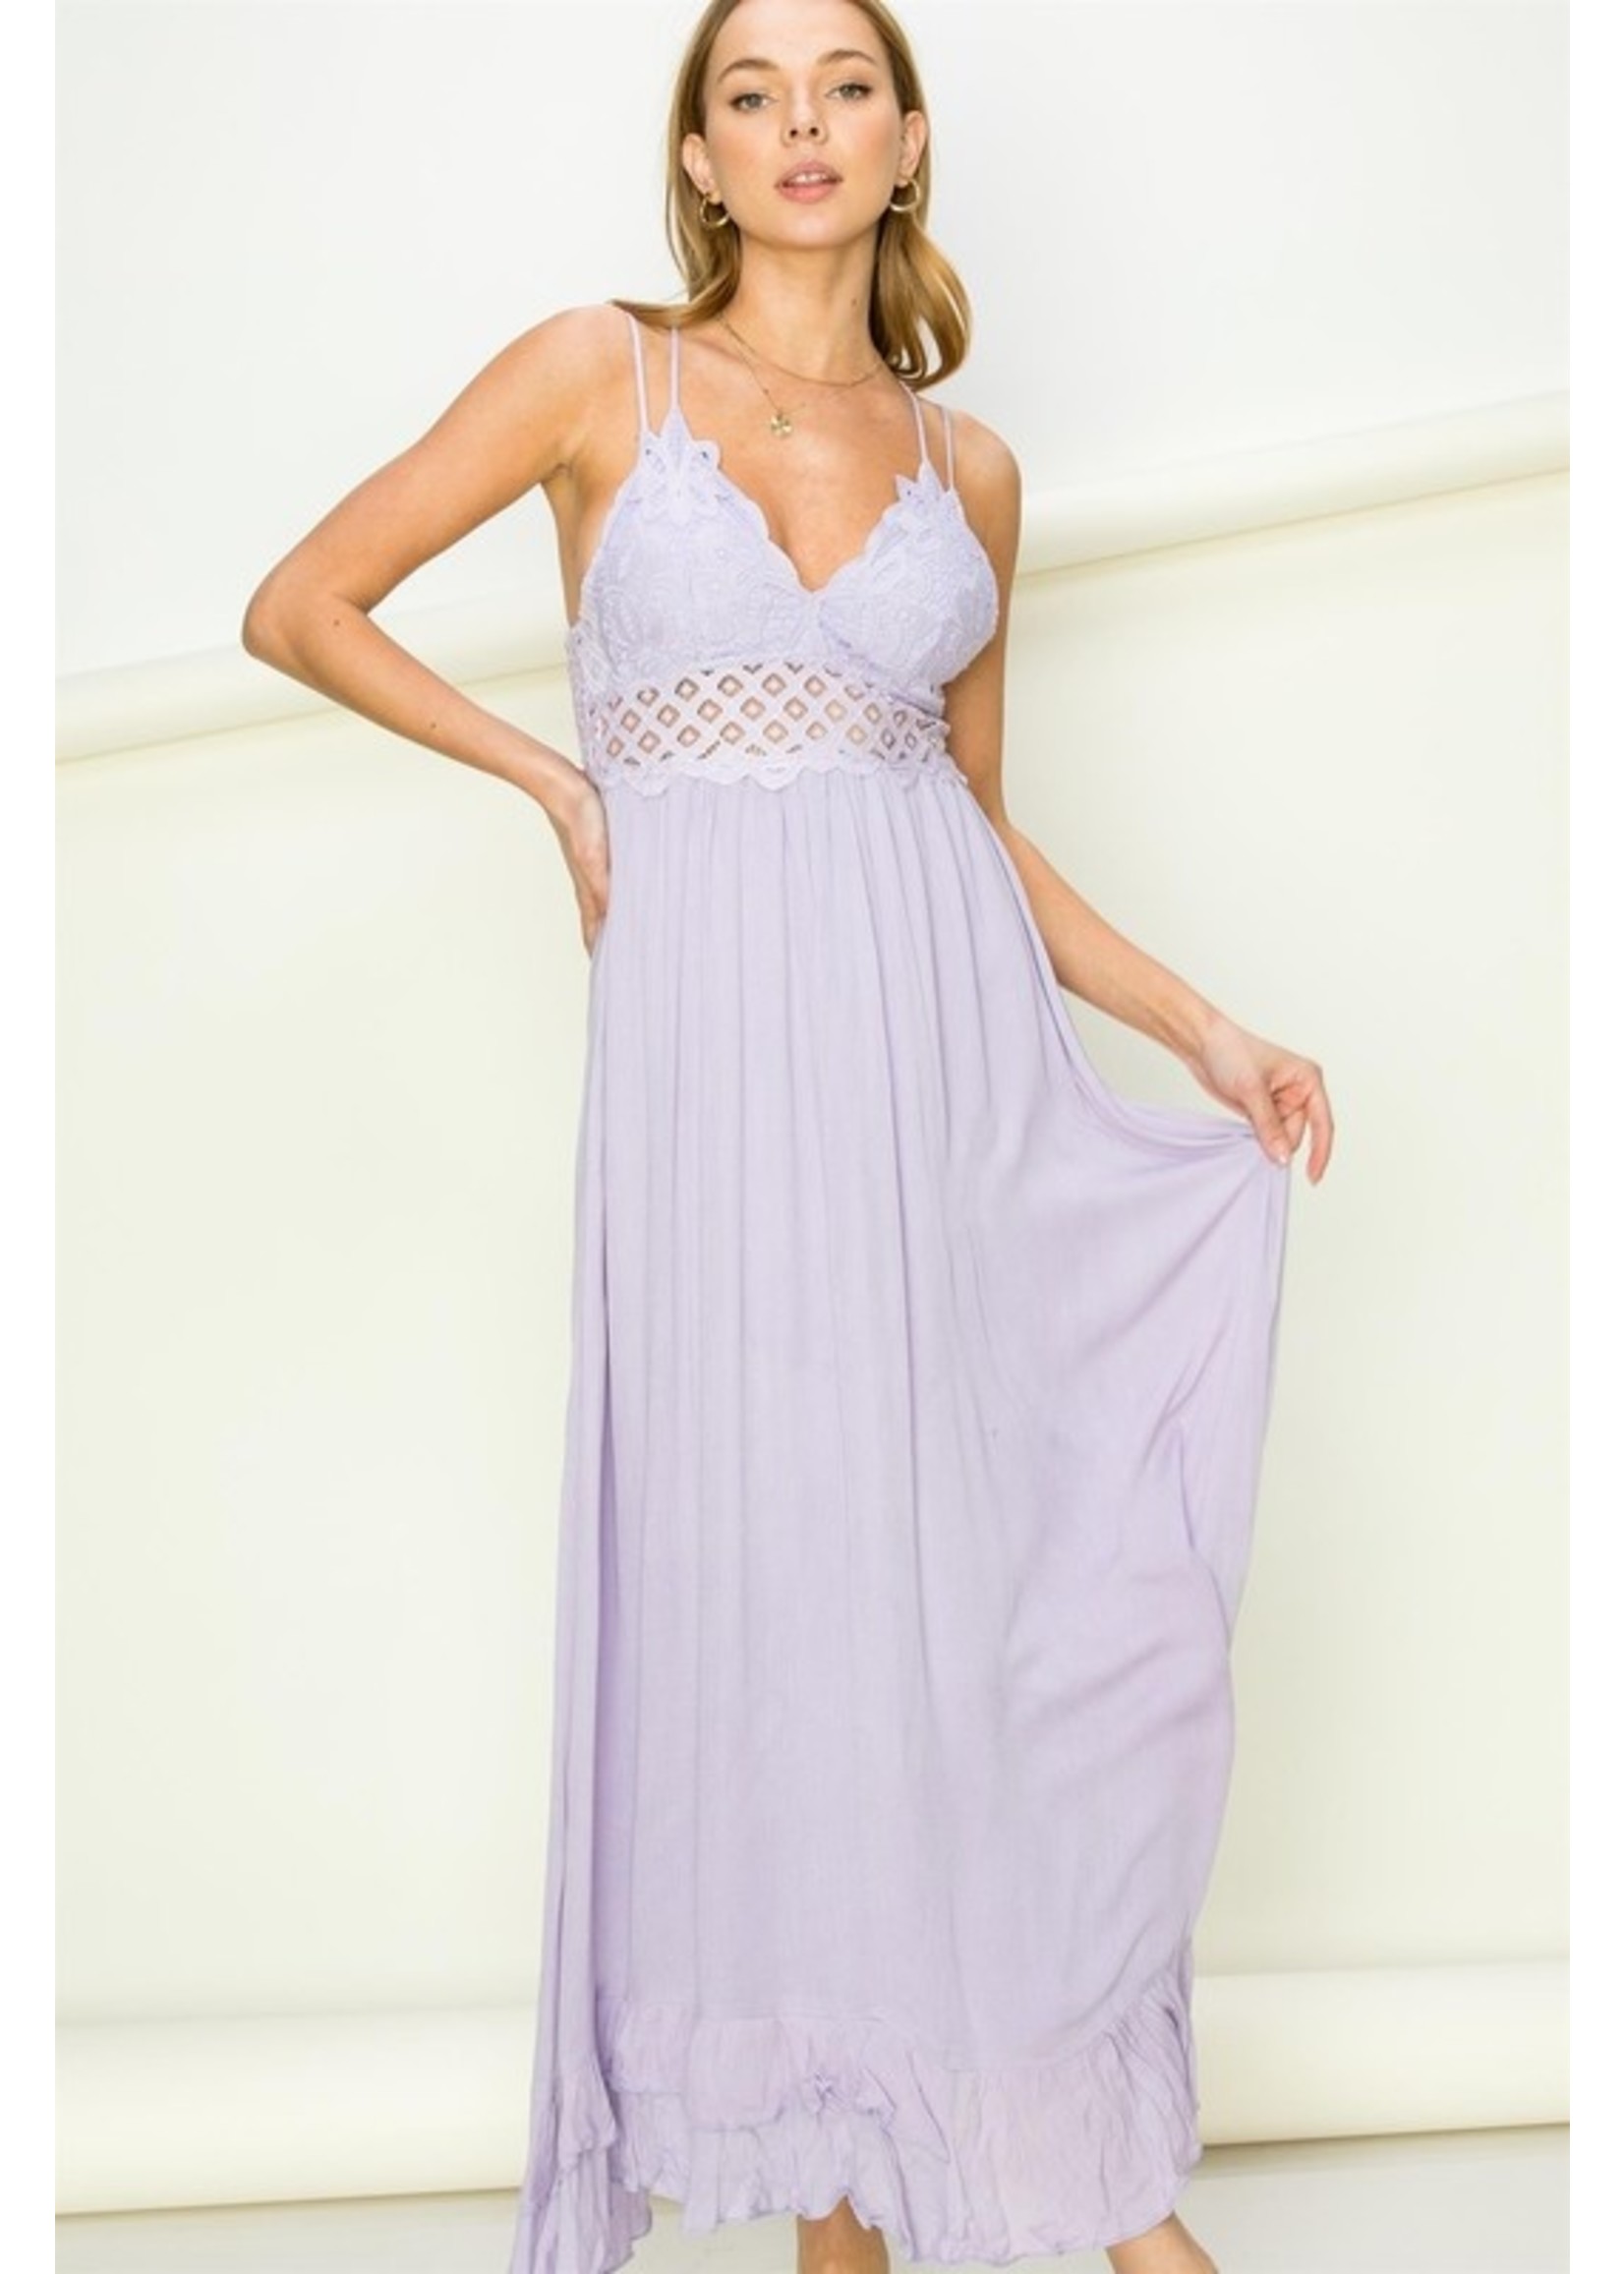 The Rome Crochet Lace Maxi Dress